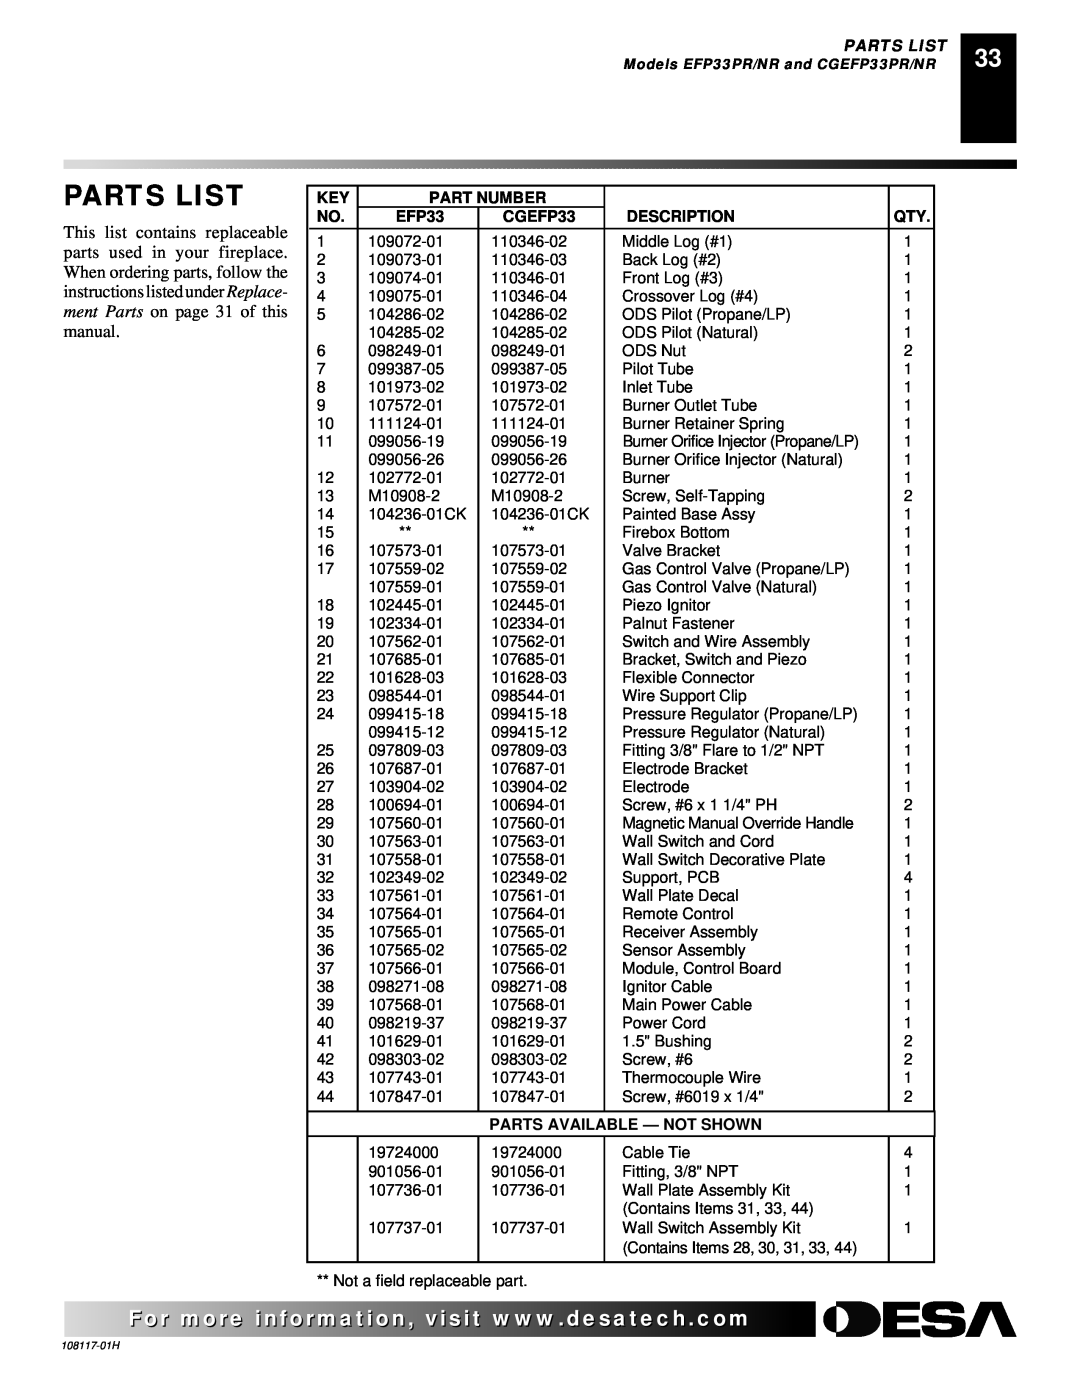 Desa EFP33PR, EFP33NR installation manual Parts List, Part Number, CGEFP33, Description, Parts Available - Not Shown 